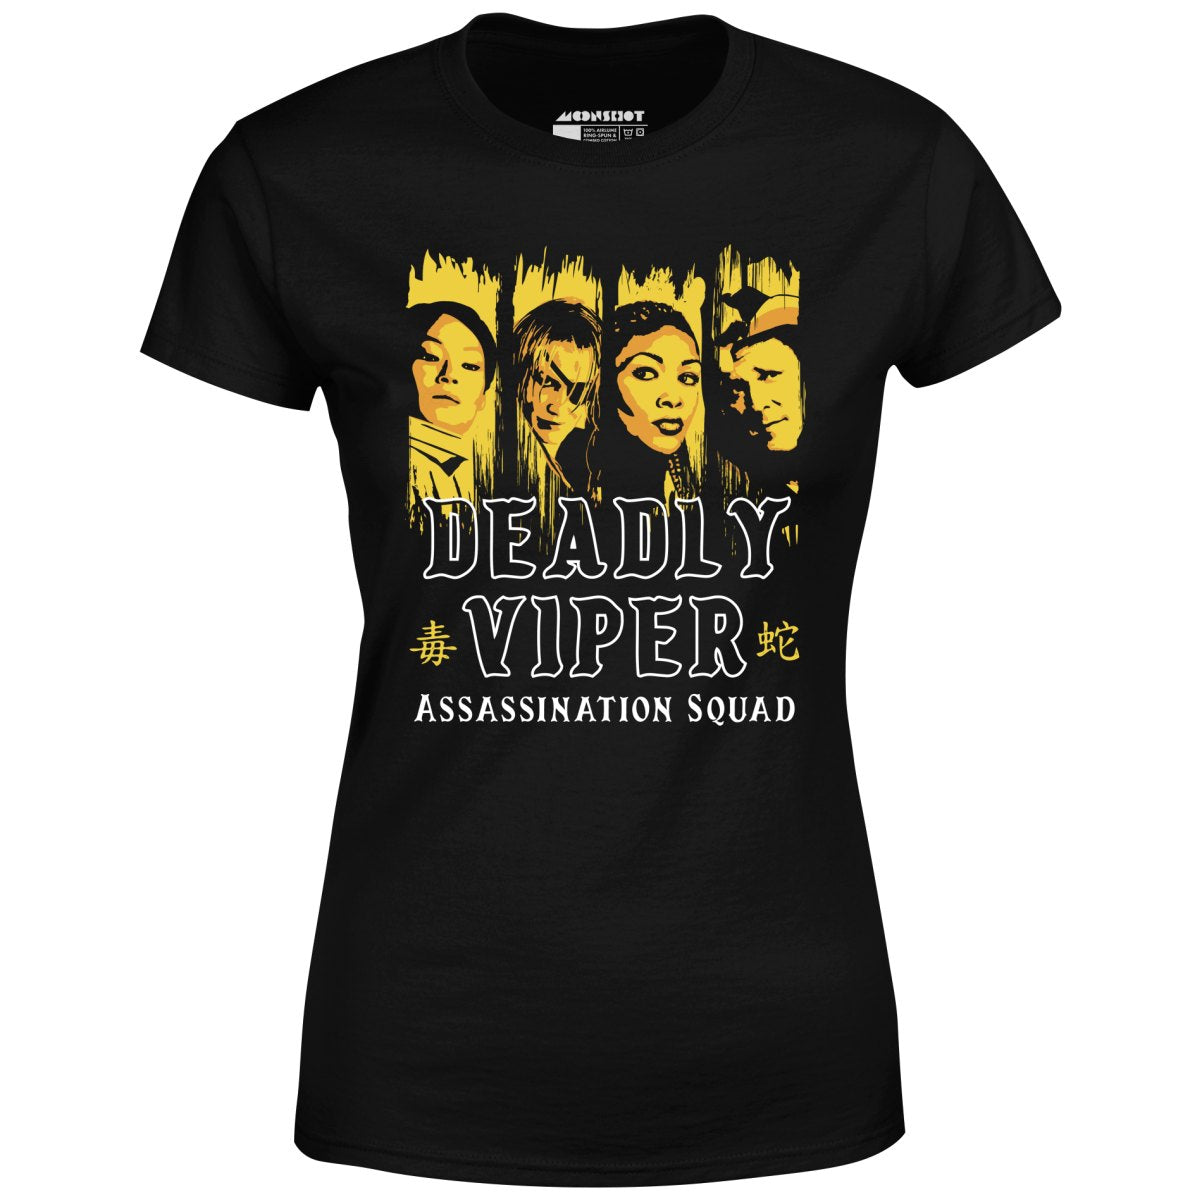 Deadly Viper Assassination Squad - Women's T-Shirt